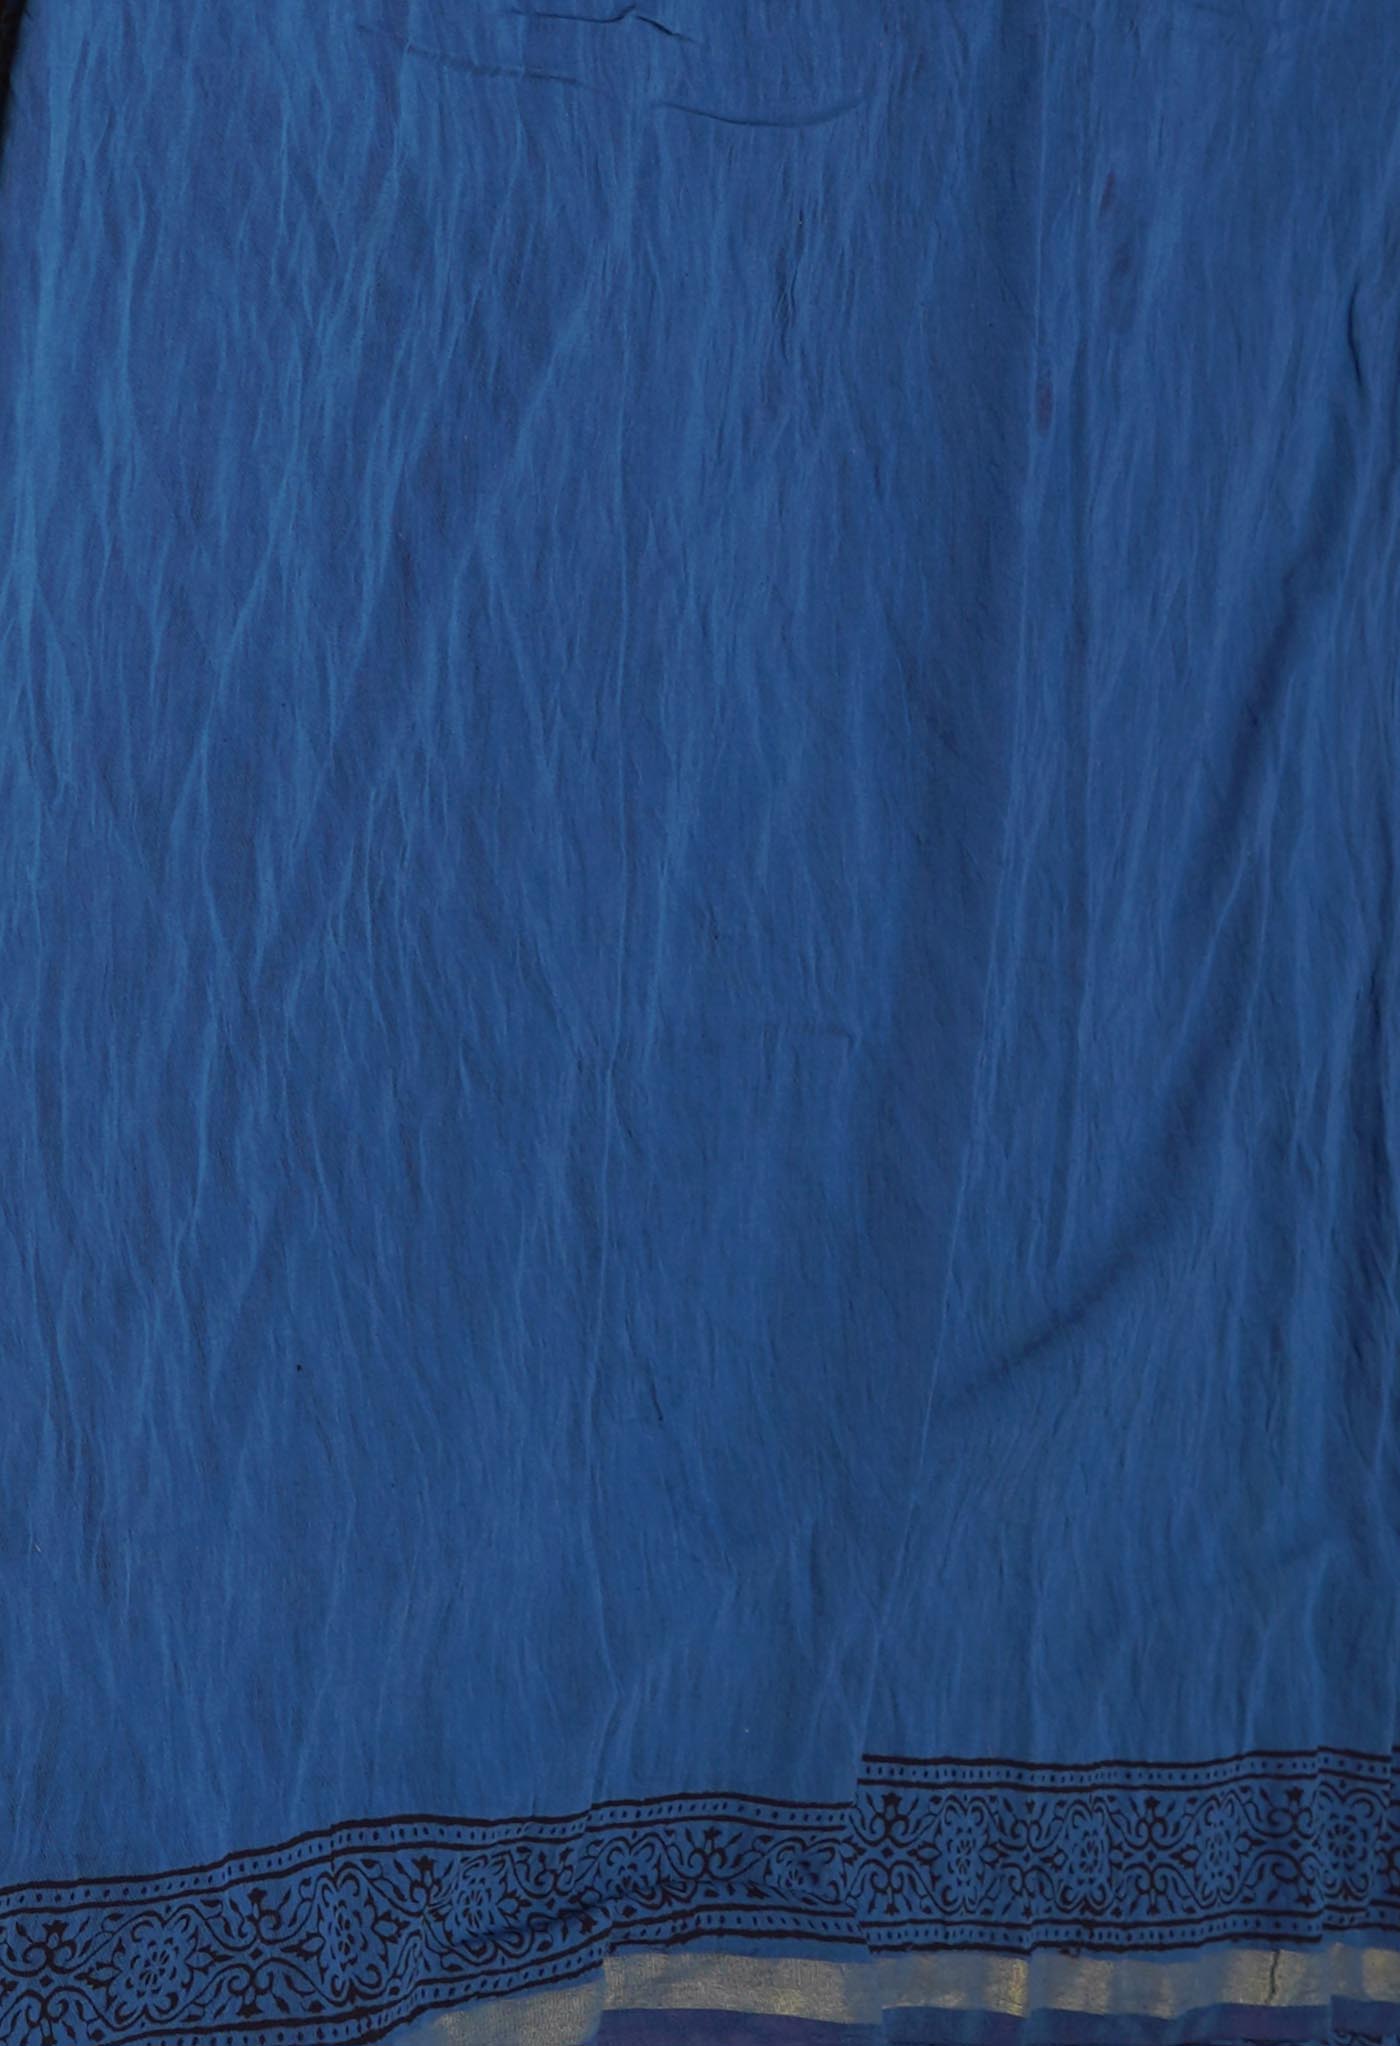 Blue  Art Chanderi Bagh Printed Cotton Saree-UNM72014